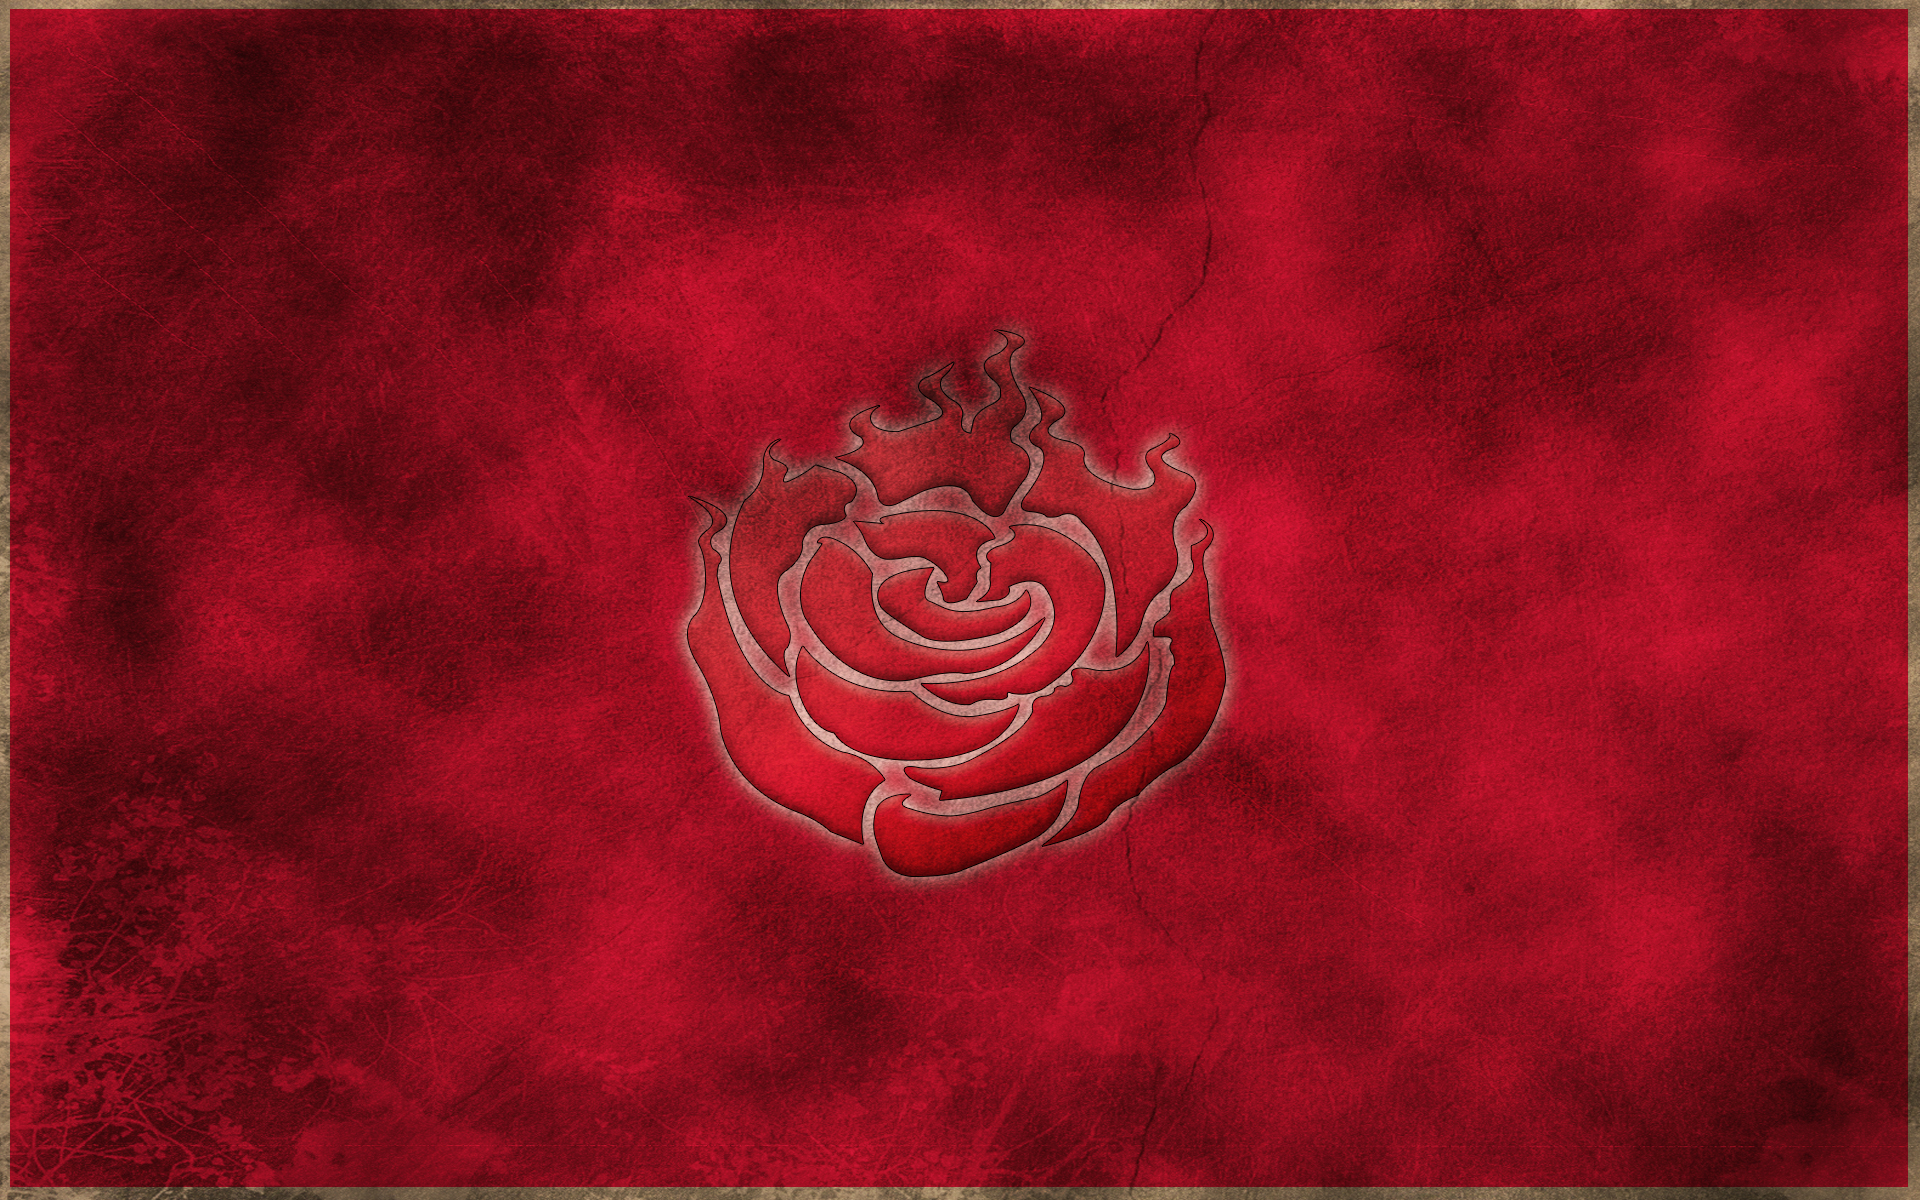 Rwby Ruby Rose Symbol Wallpaper By Crypticspider